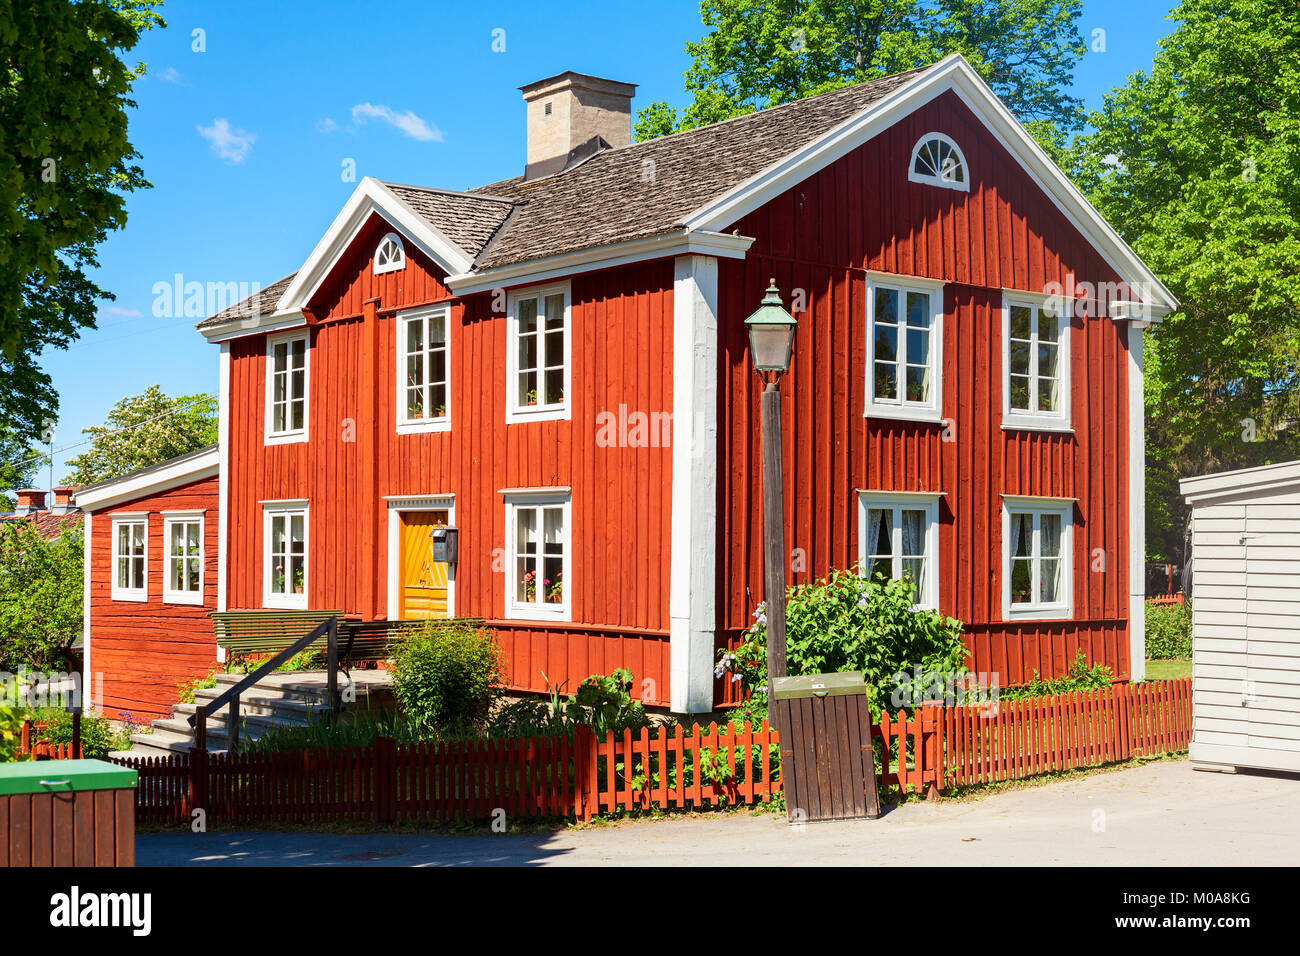 beautiful and tyical old house in skansen garden Stock Photo